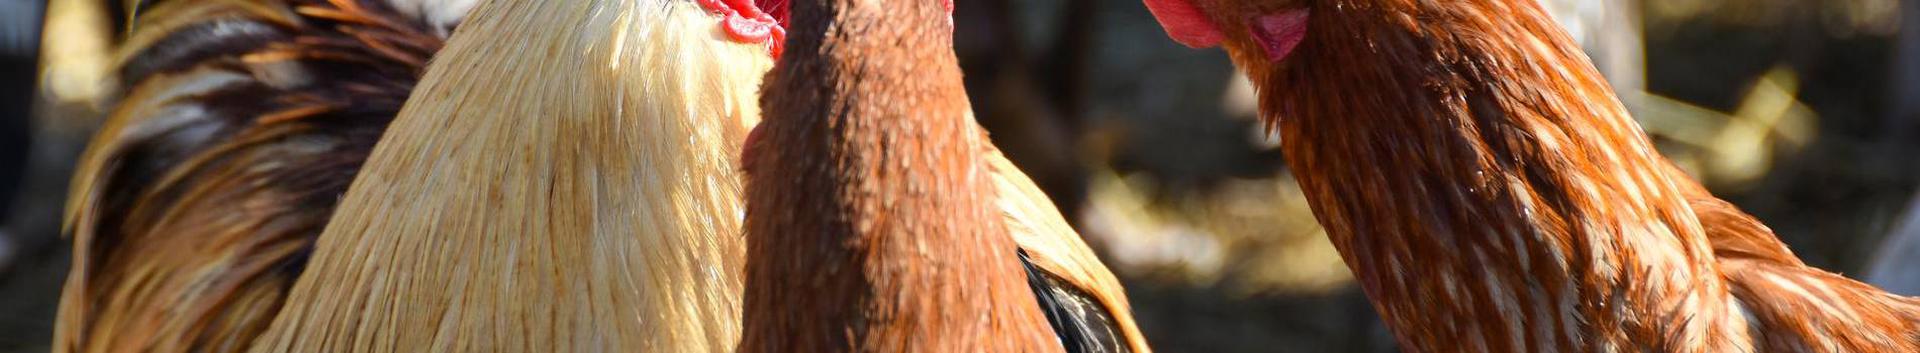 poultry production, farm animals